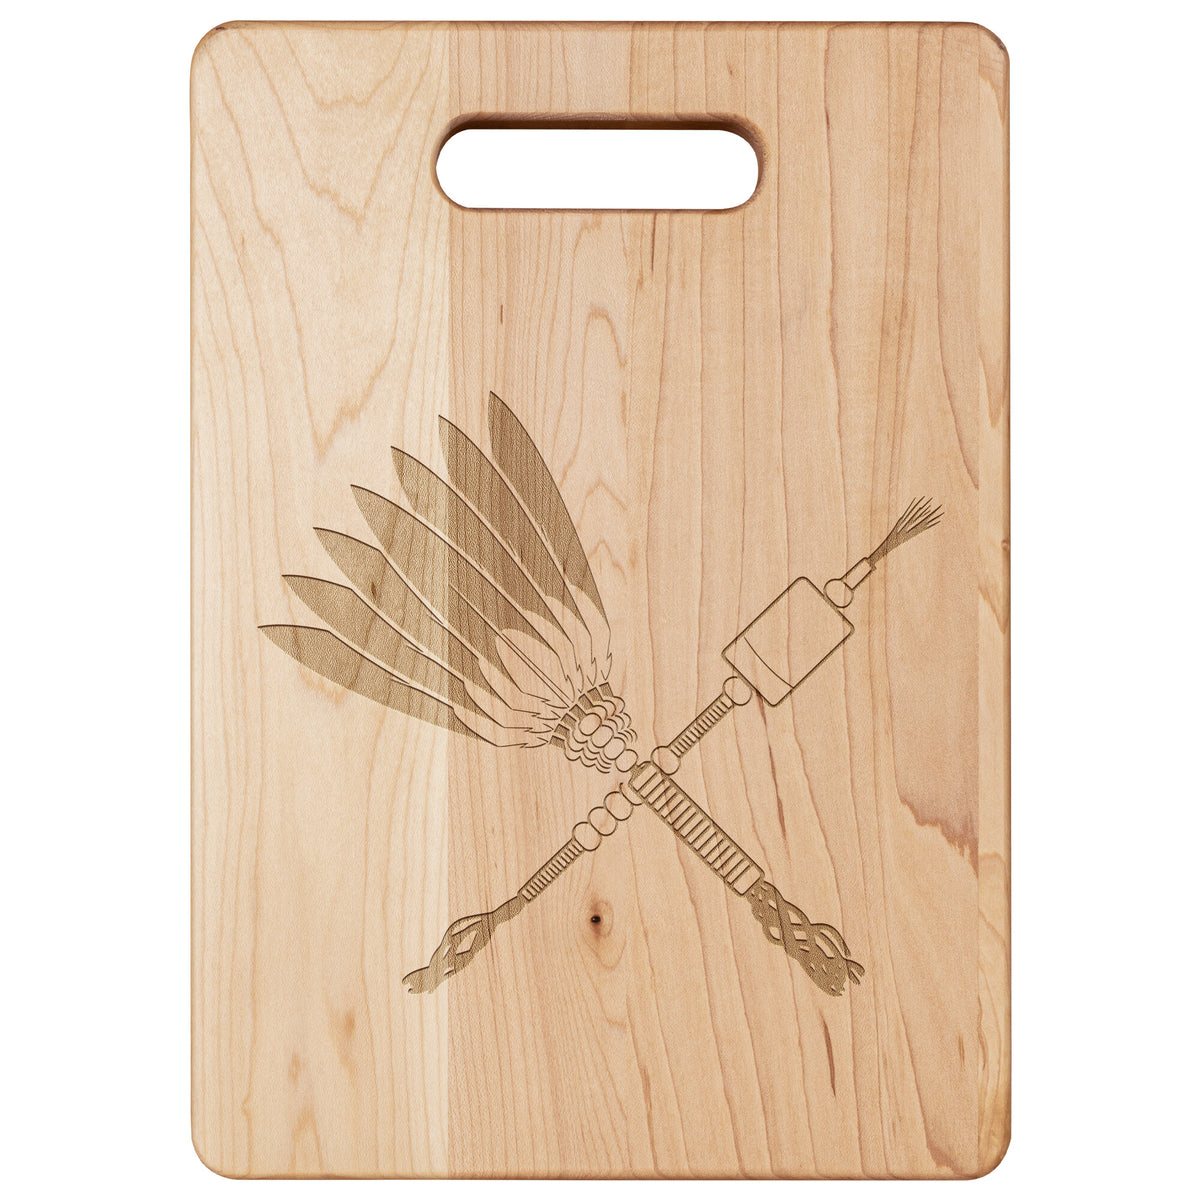 Fan and Rattle Maple Cutting Board